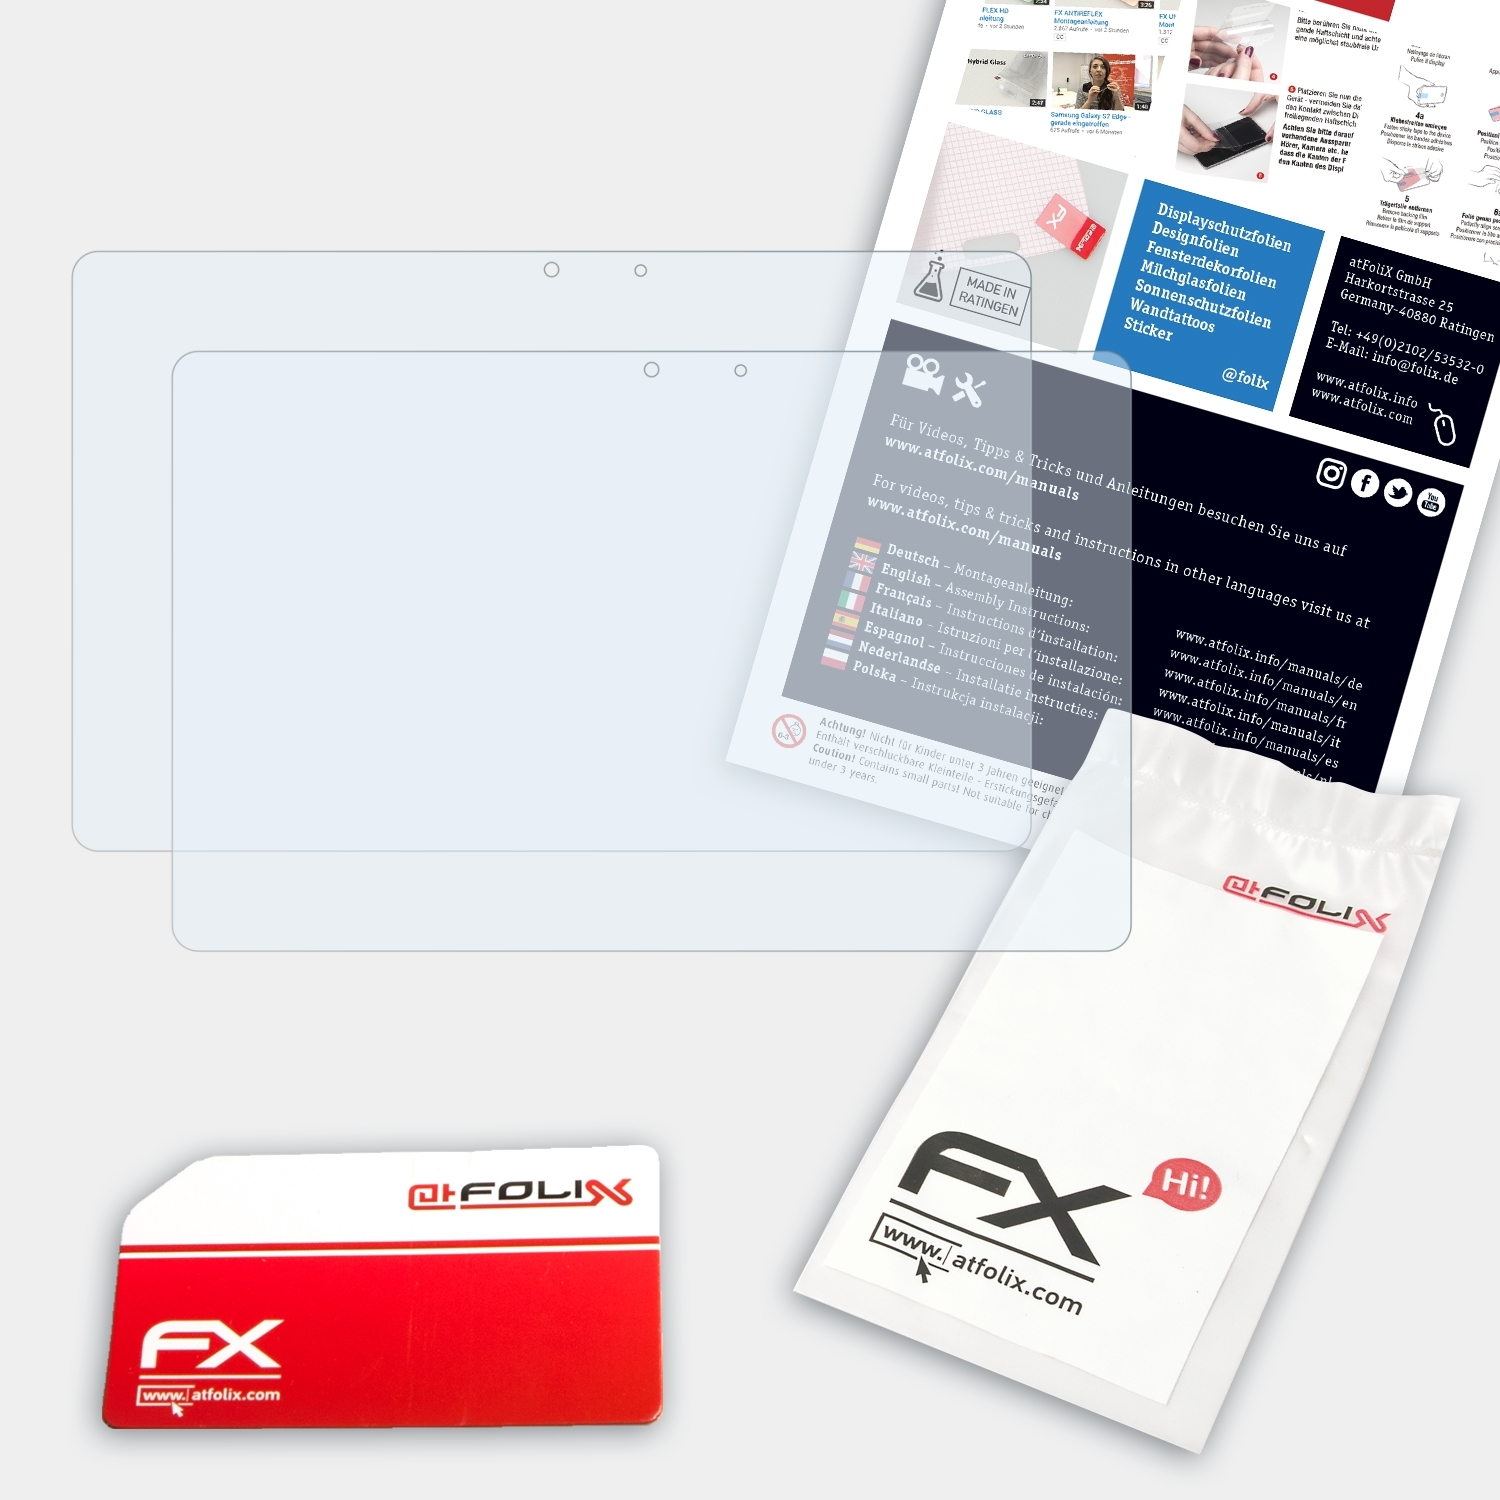 ATFOLIX 2x Displayschutz(für TelePad 10A3 Xoro FX-Clear 4G)